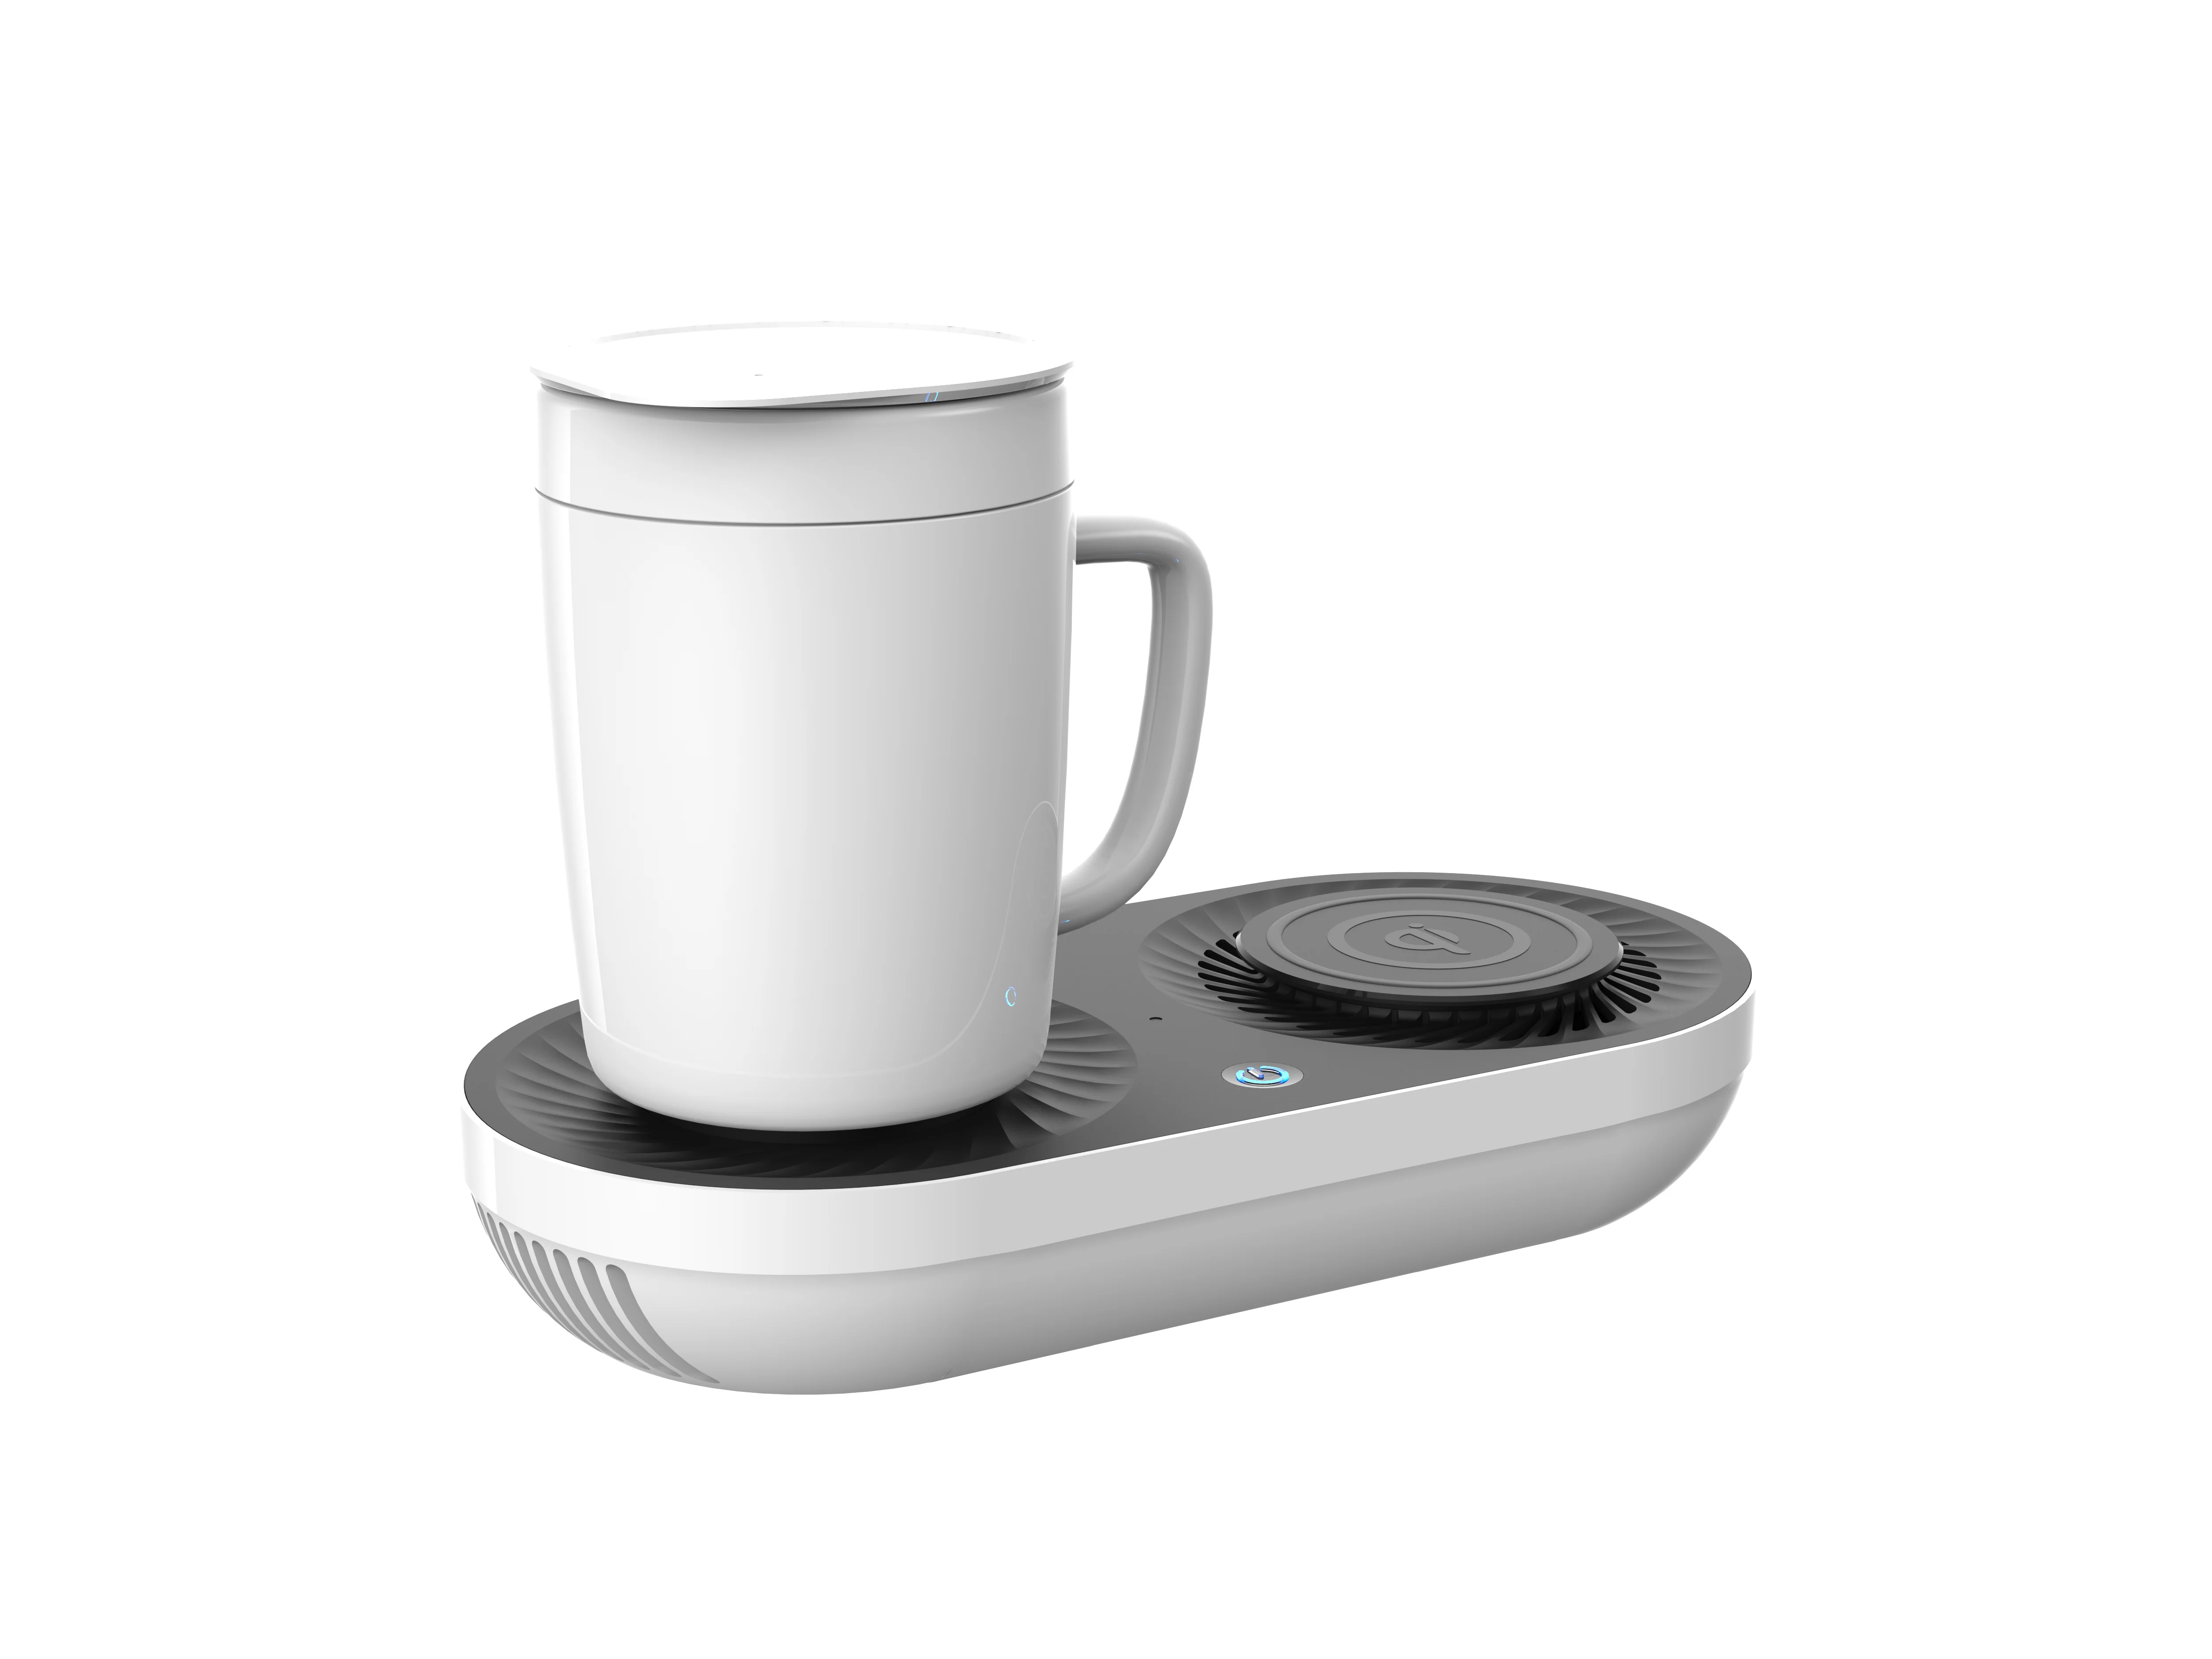 Coffee Mug Warmer, PALTIER Coffee Mug Warmer Electric Desktop Heated a 